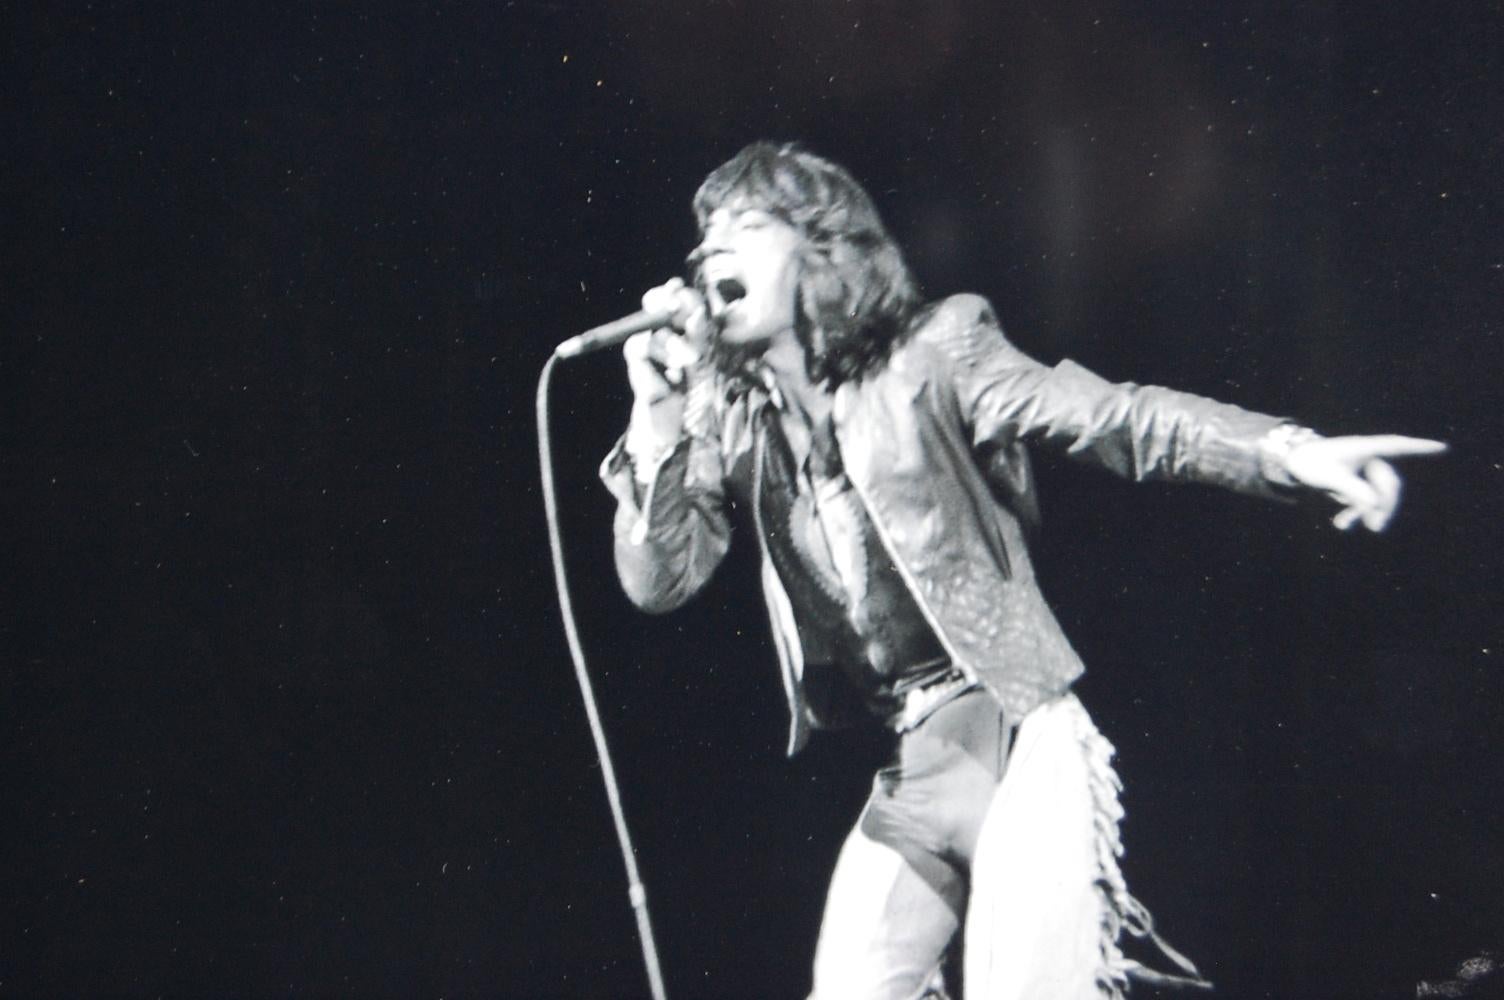 English Mick Jagger Photograph, On Stage, London